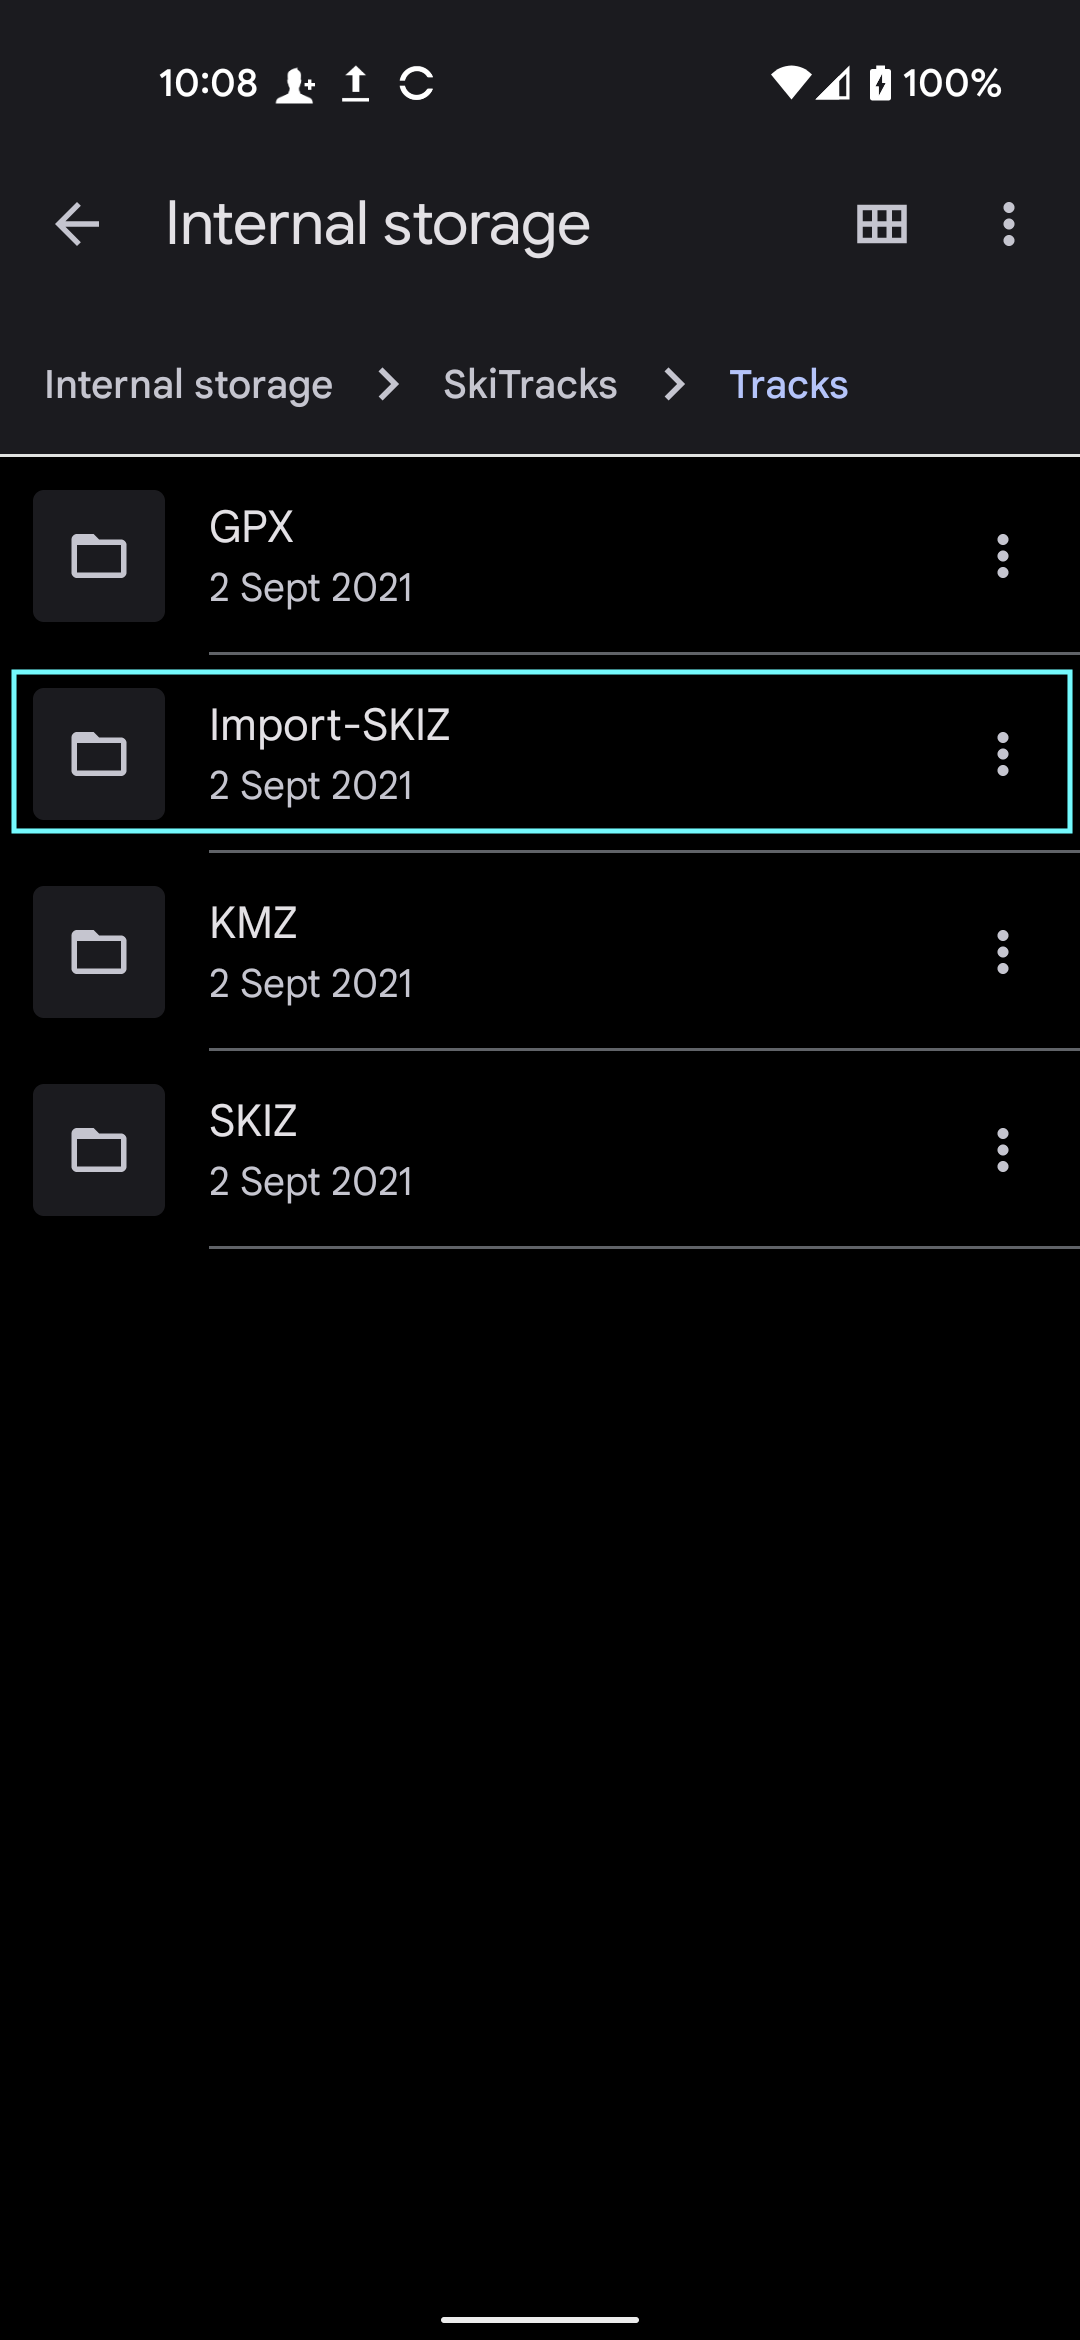 Files-InternalStorage-SkiTracks-Tracks-Import-SKIZ.png